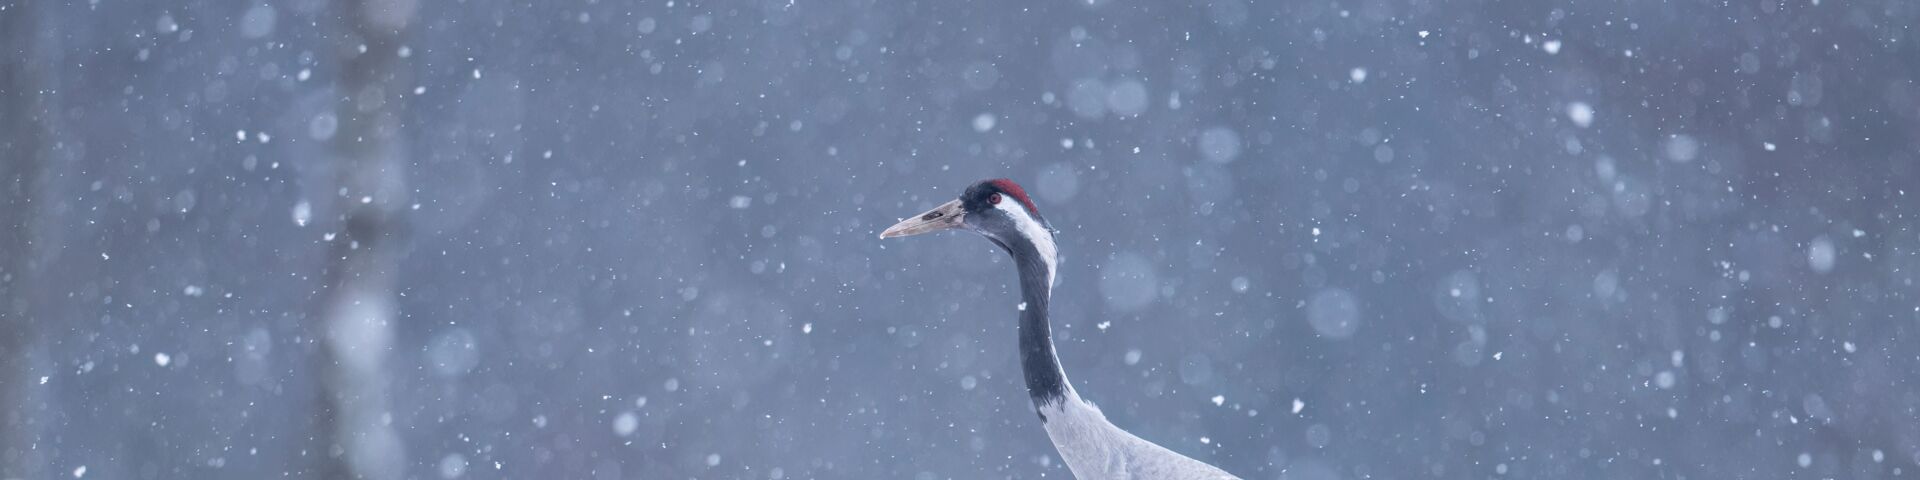 Crane bird in snow